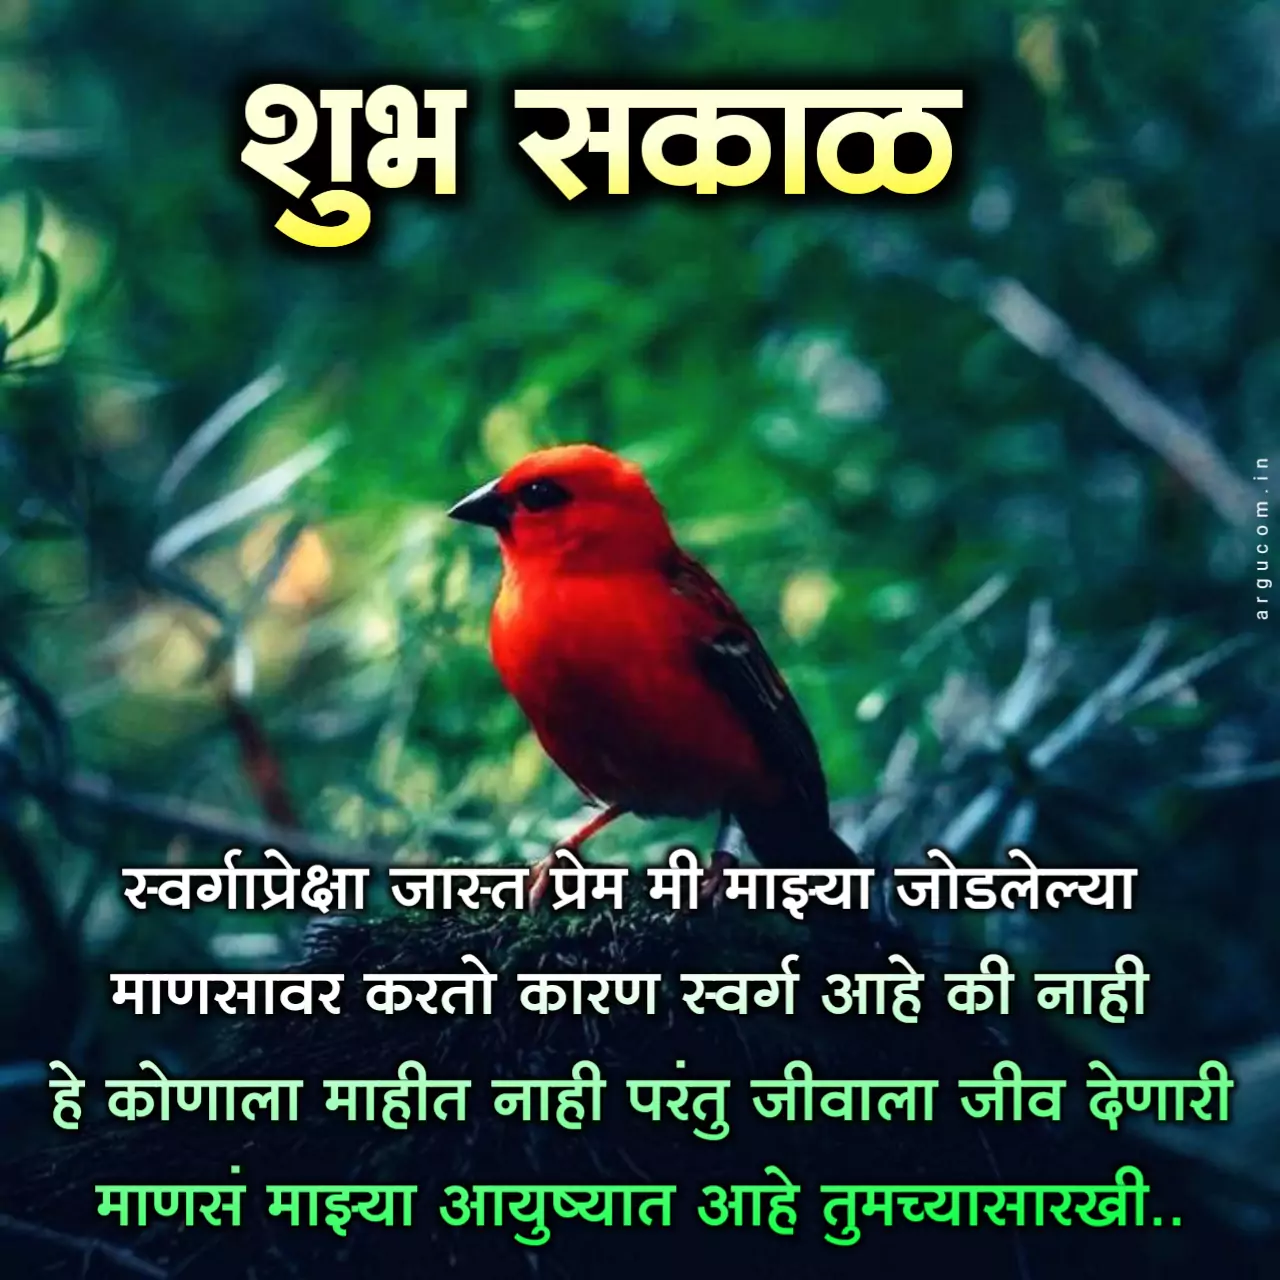 Good morning message in marathi